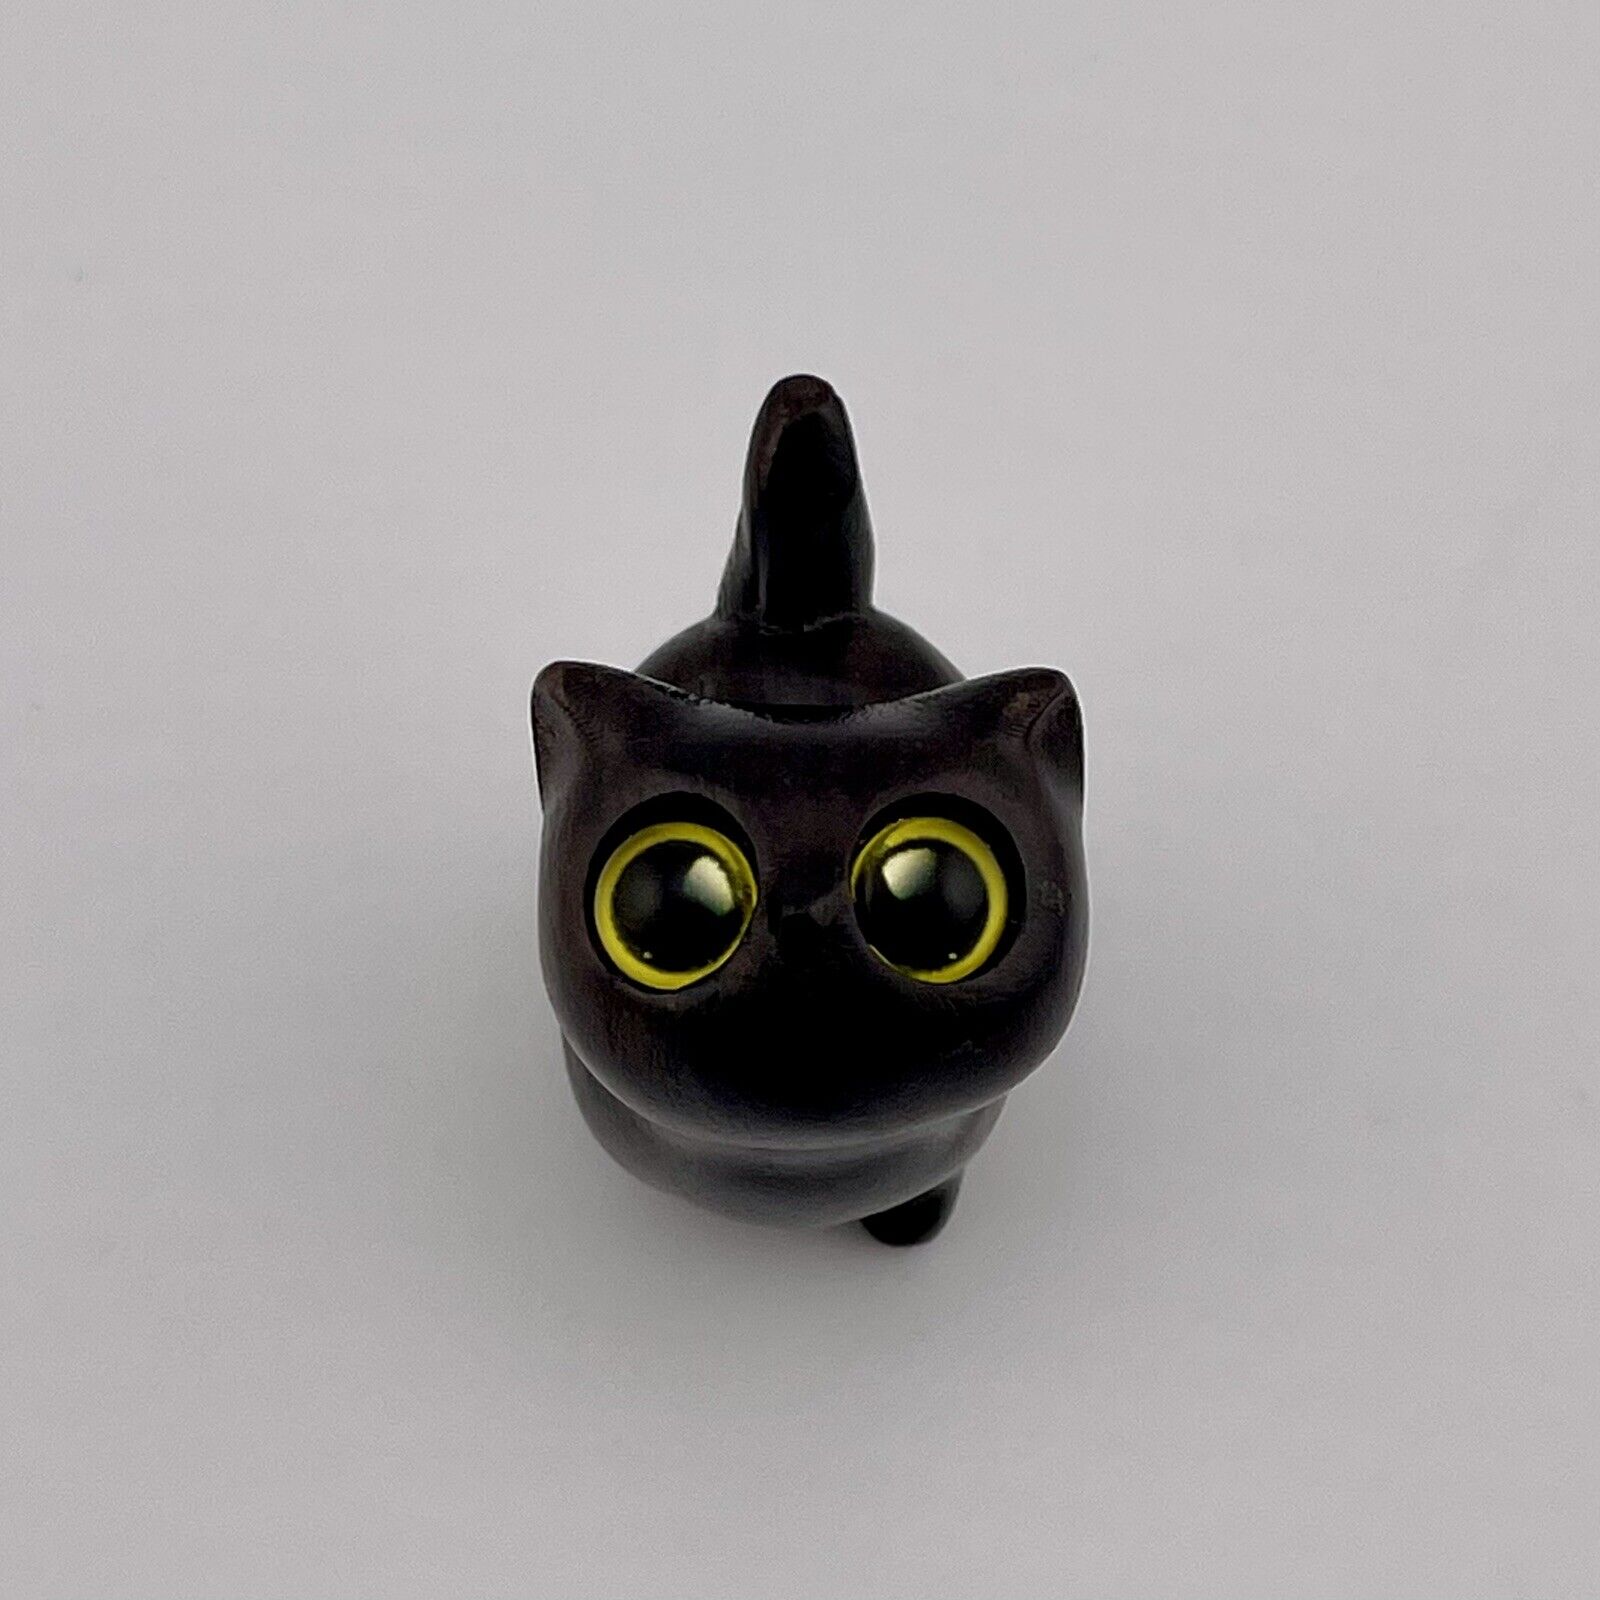 Adorable Tiny Black Wood Cat Desk Figurine 1.25 Inch